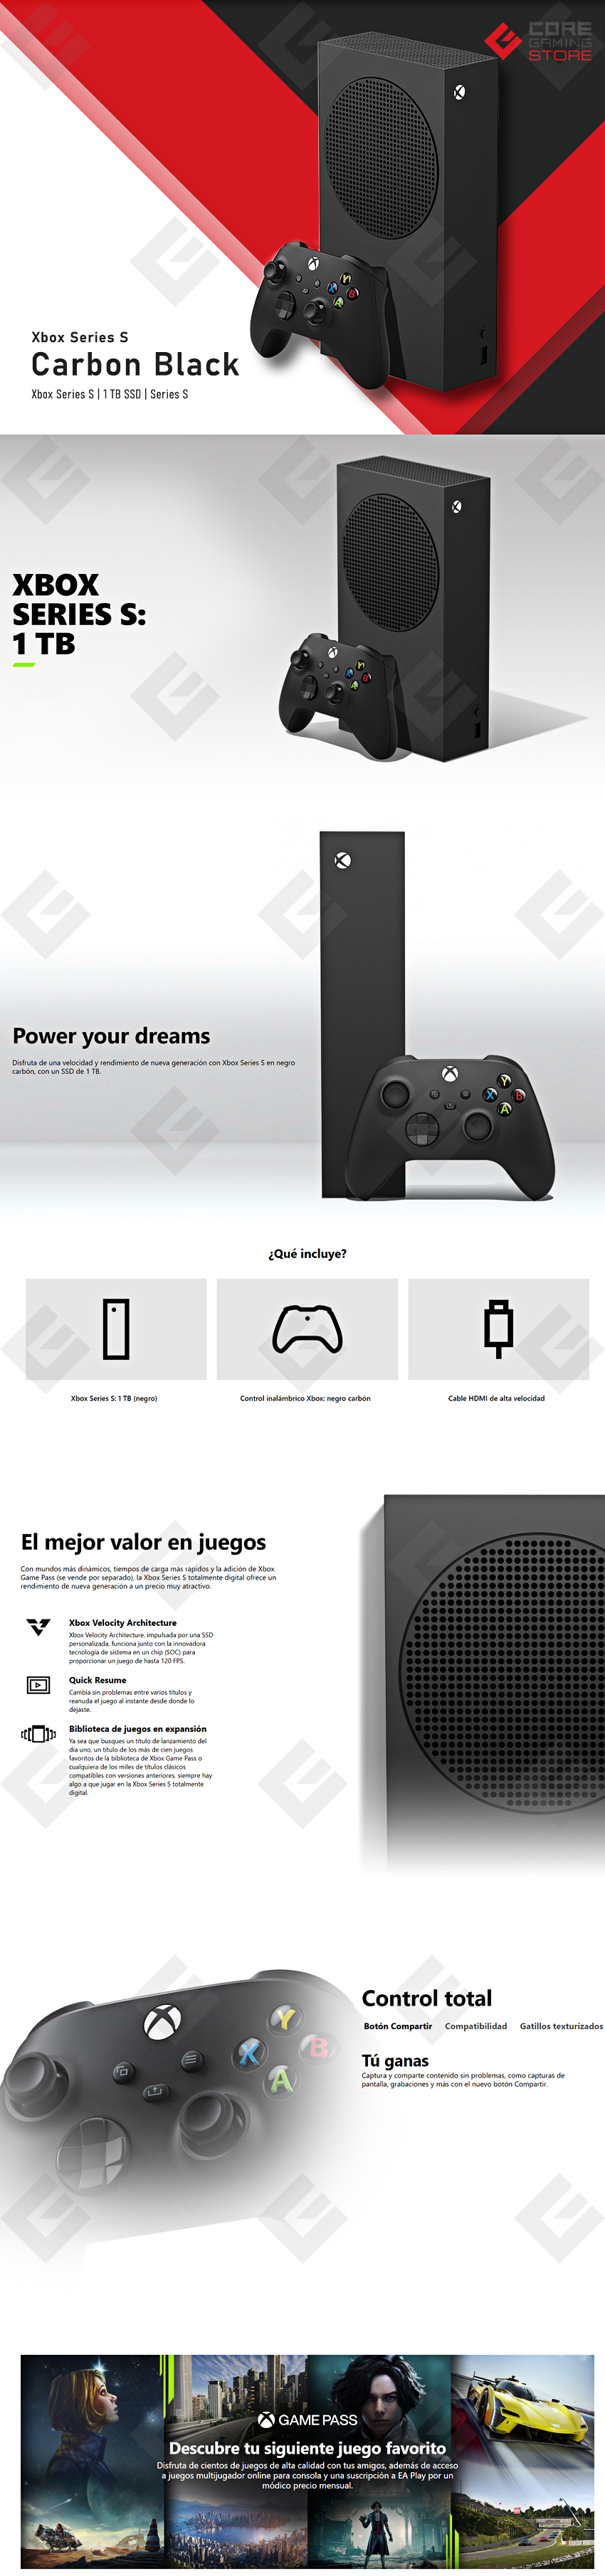 Consola Xbox Series S | 1TB | Carbon Black | Edicion Digital - XBOX00059 |  Core Gaming